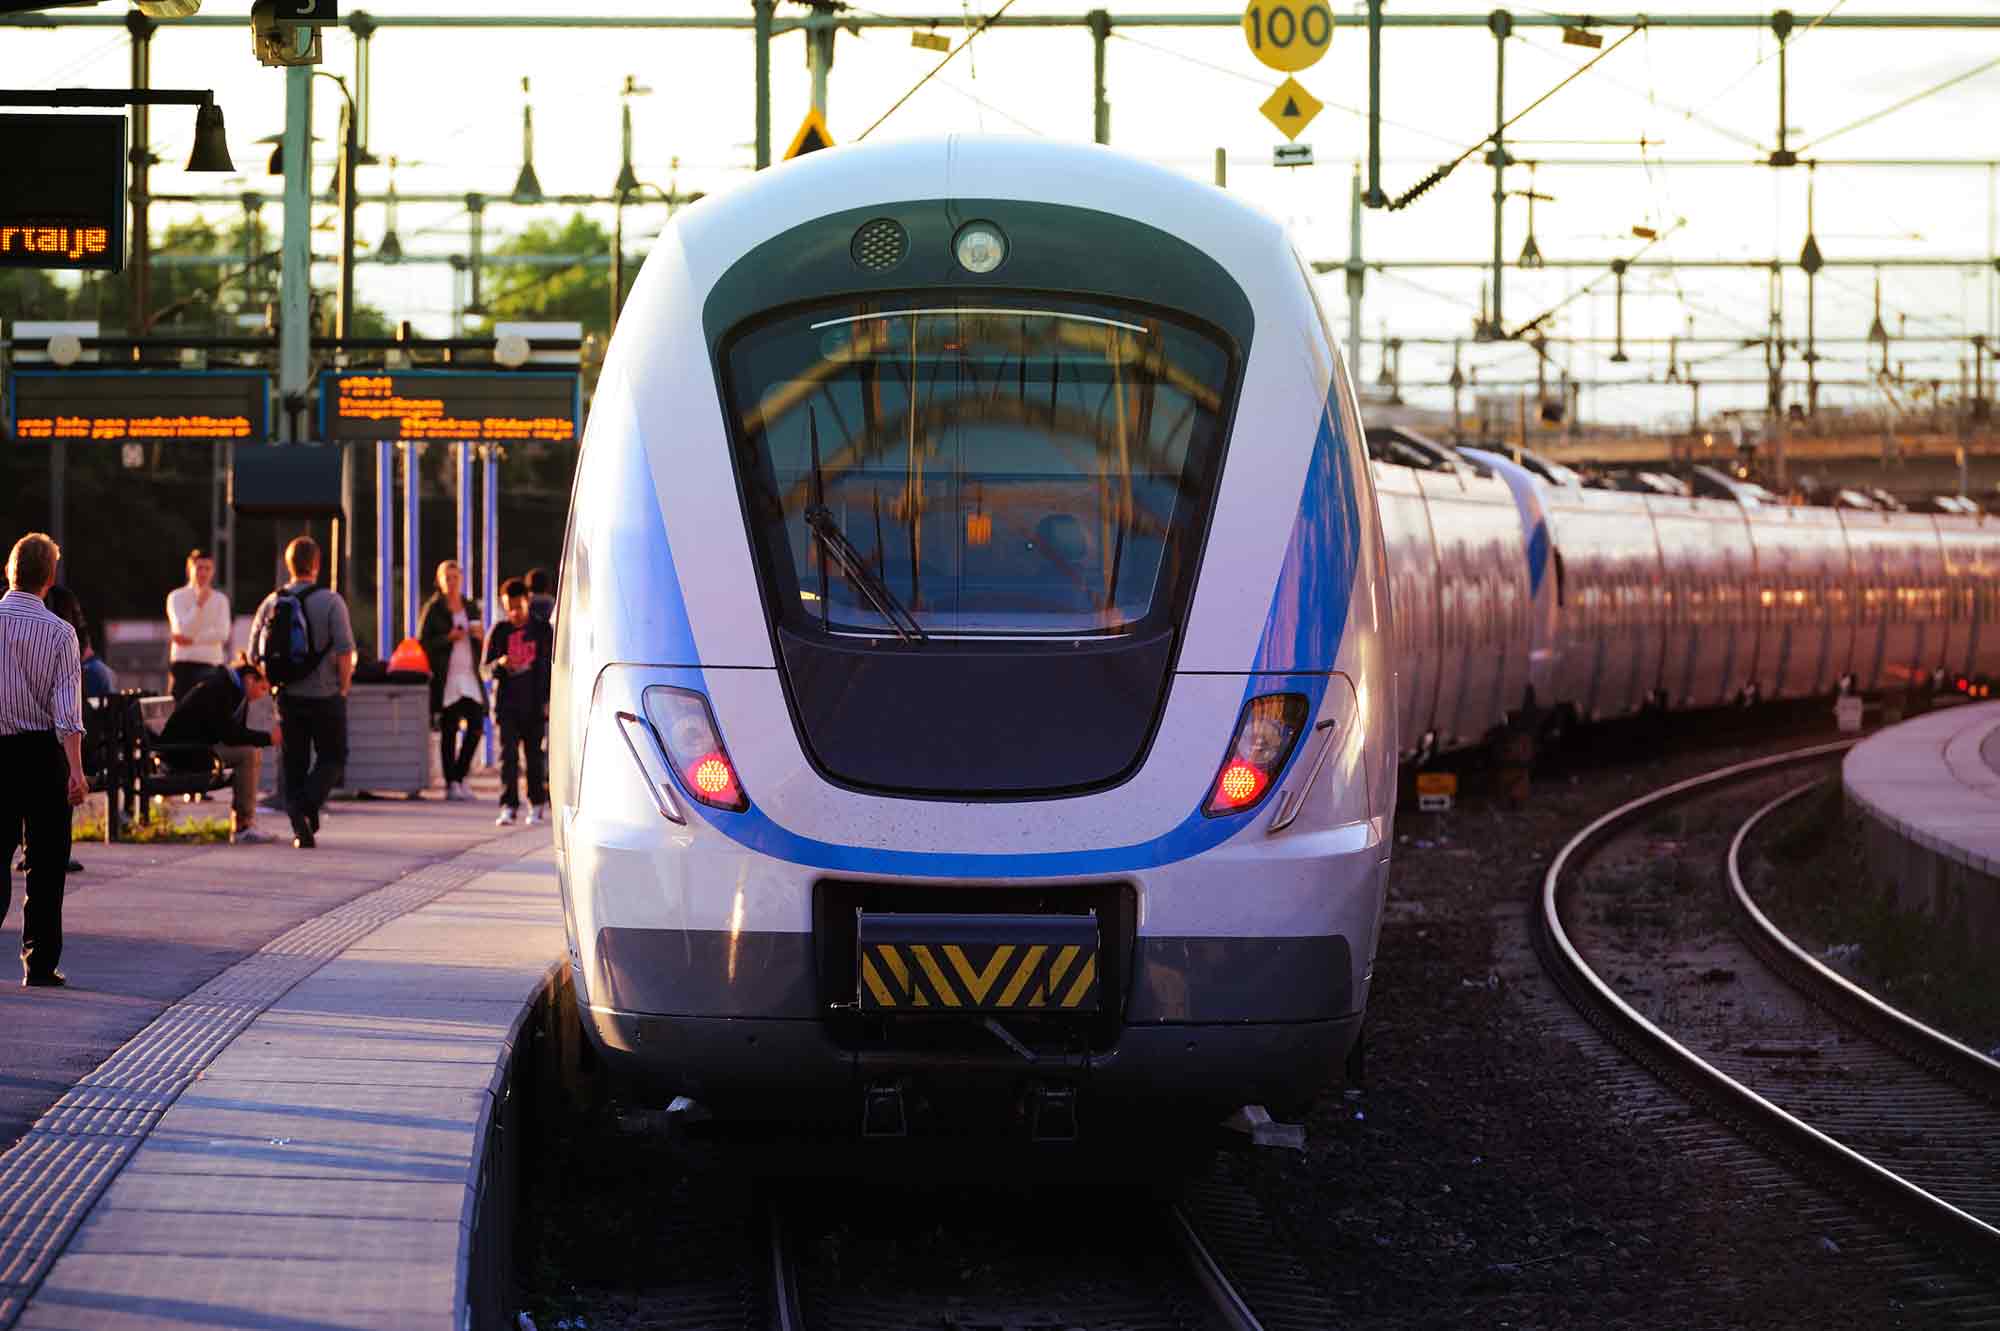 Swedish commuter train at station.